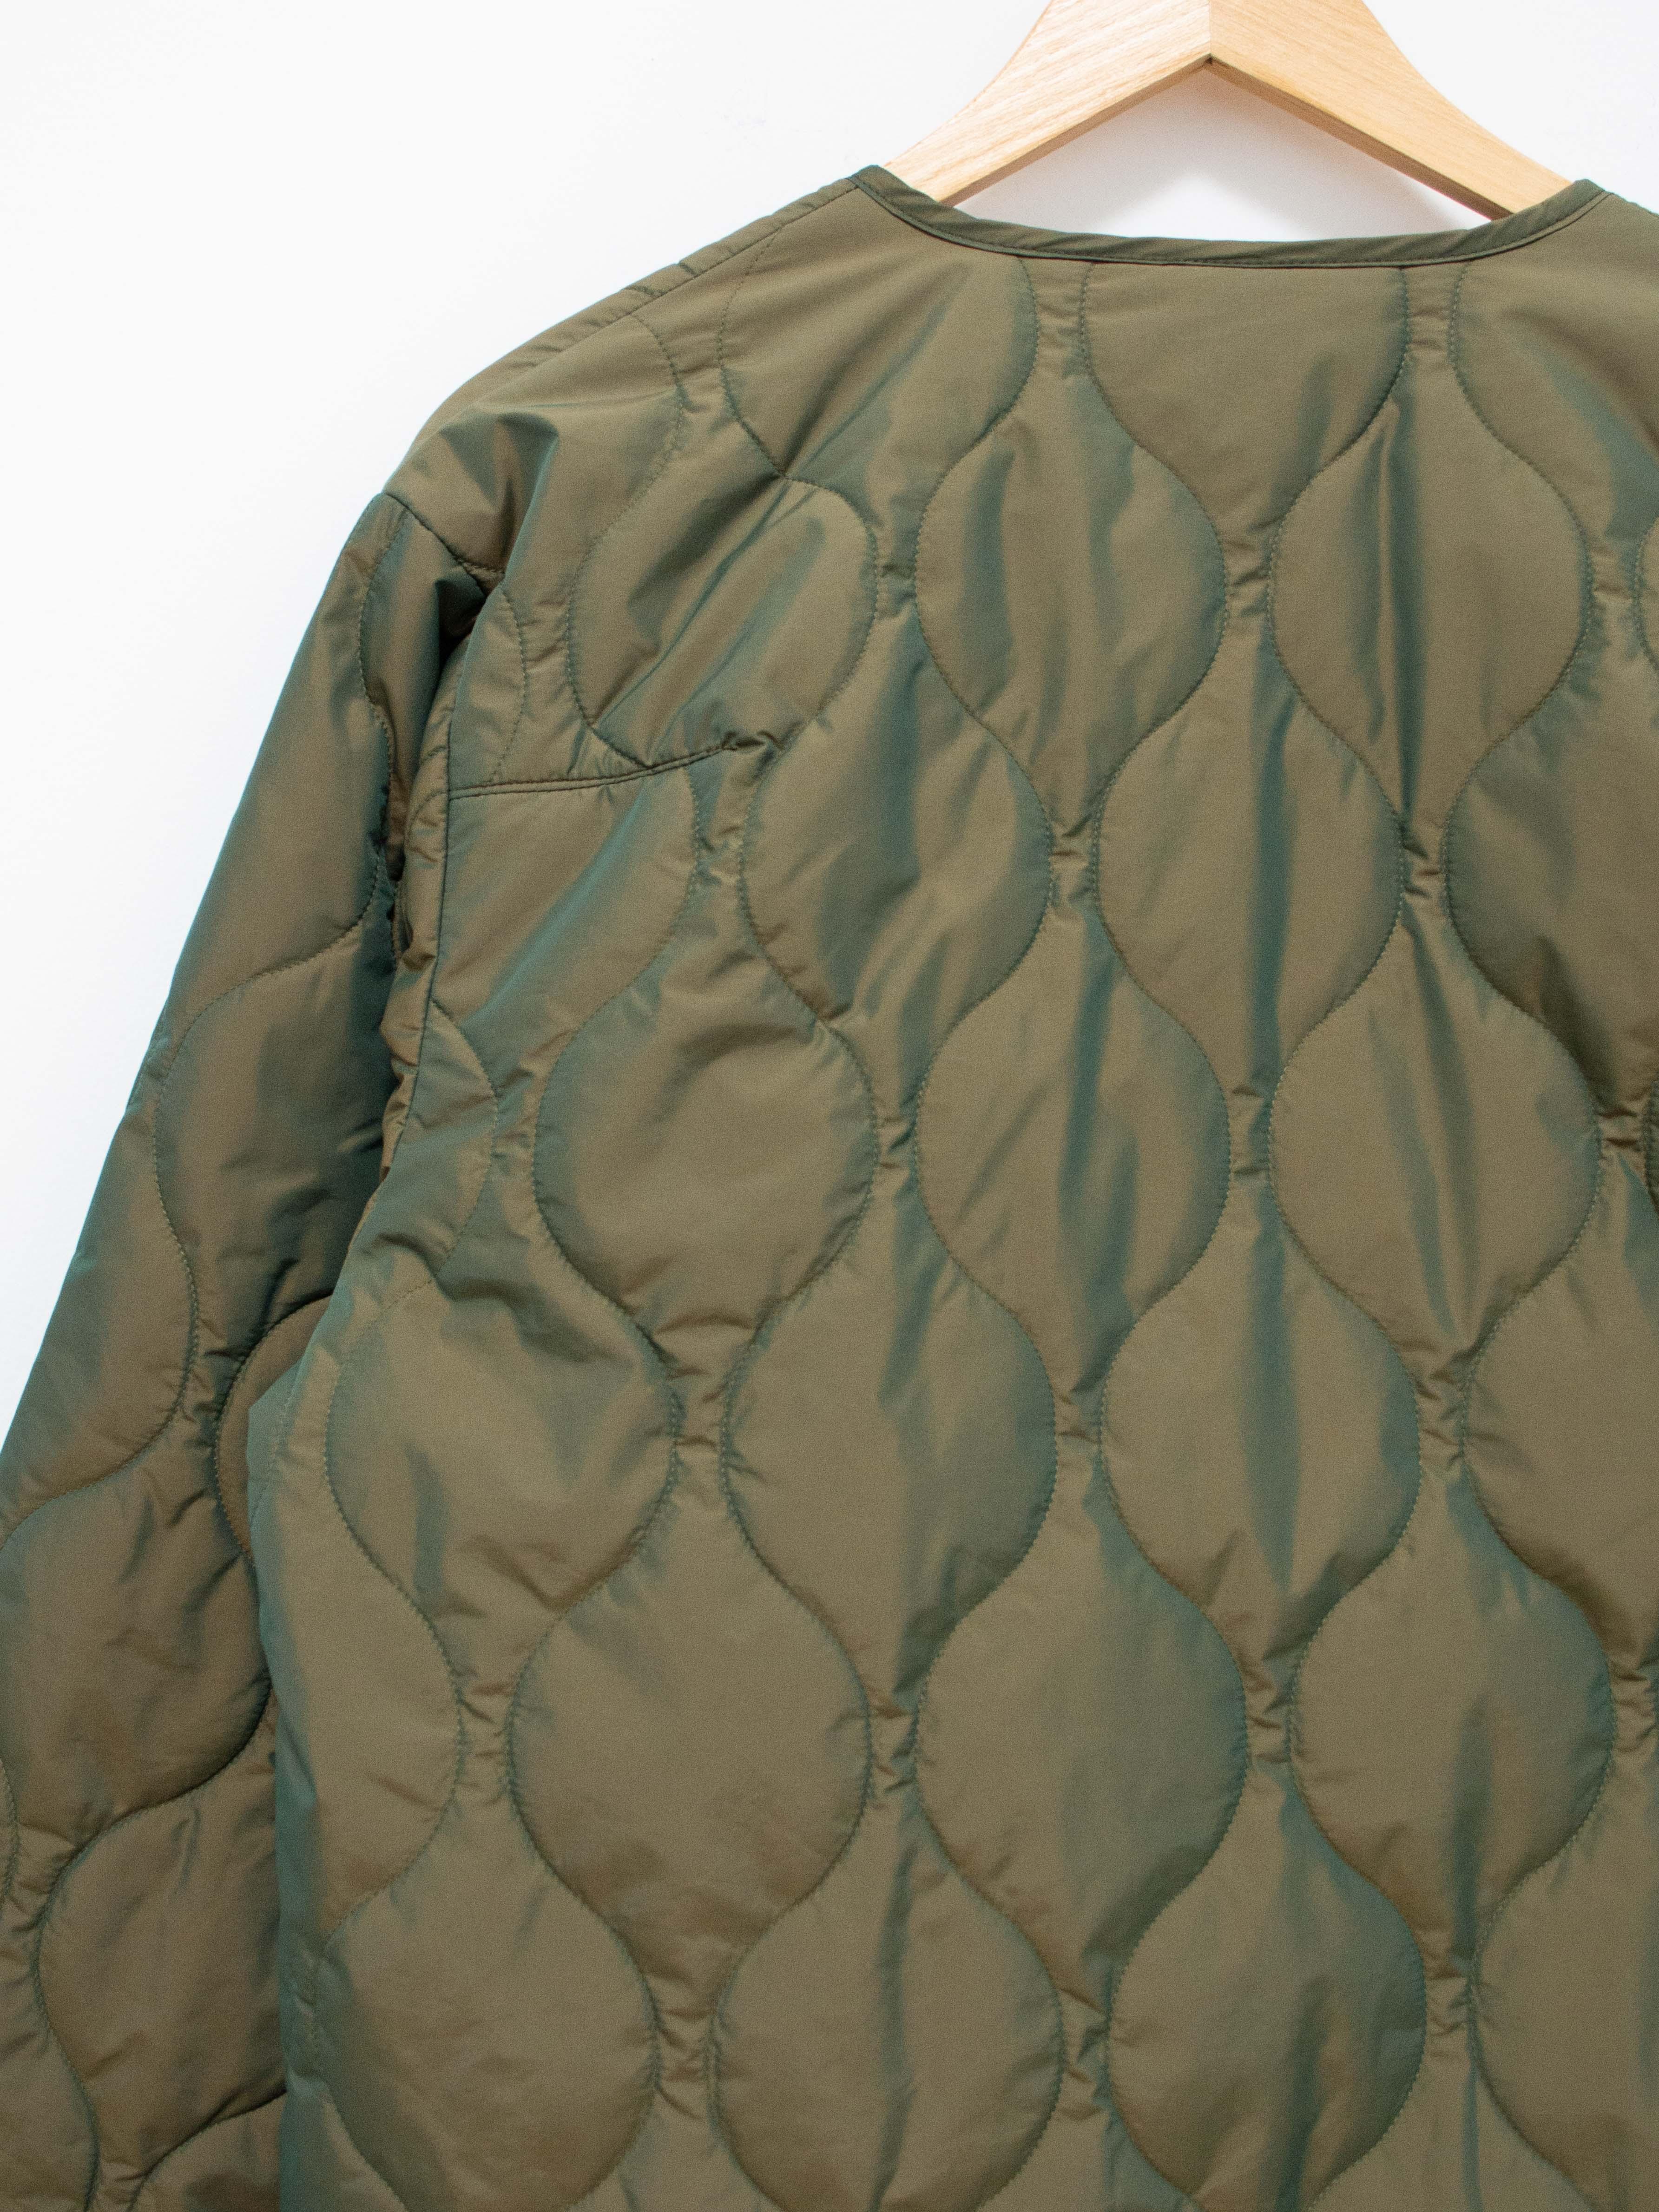 Namu Shop - ts(s) Lightweight Taffeta Quilted Liner Buckle Jacket - Olive